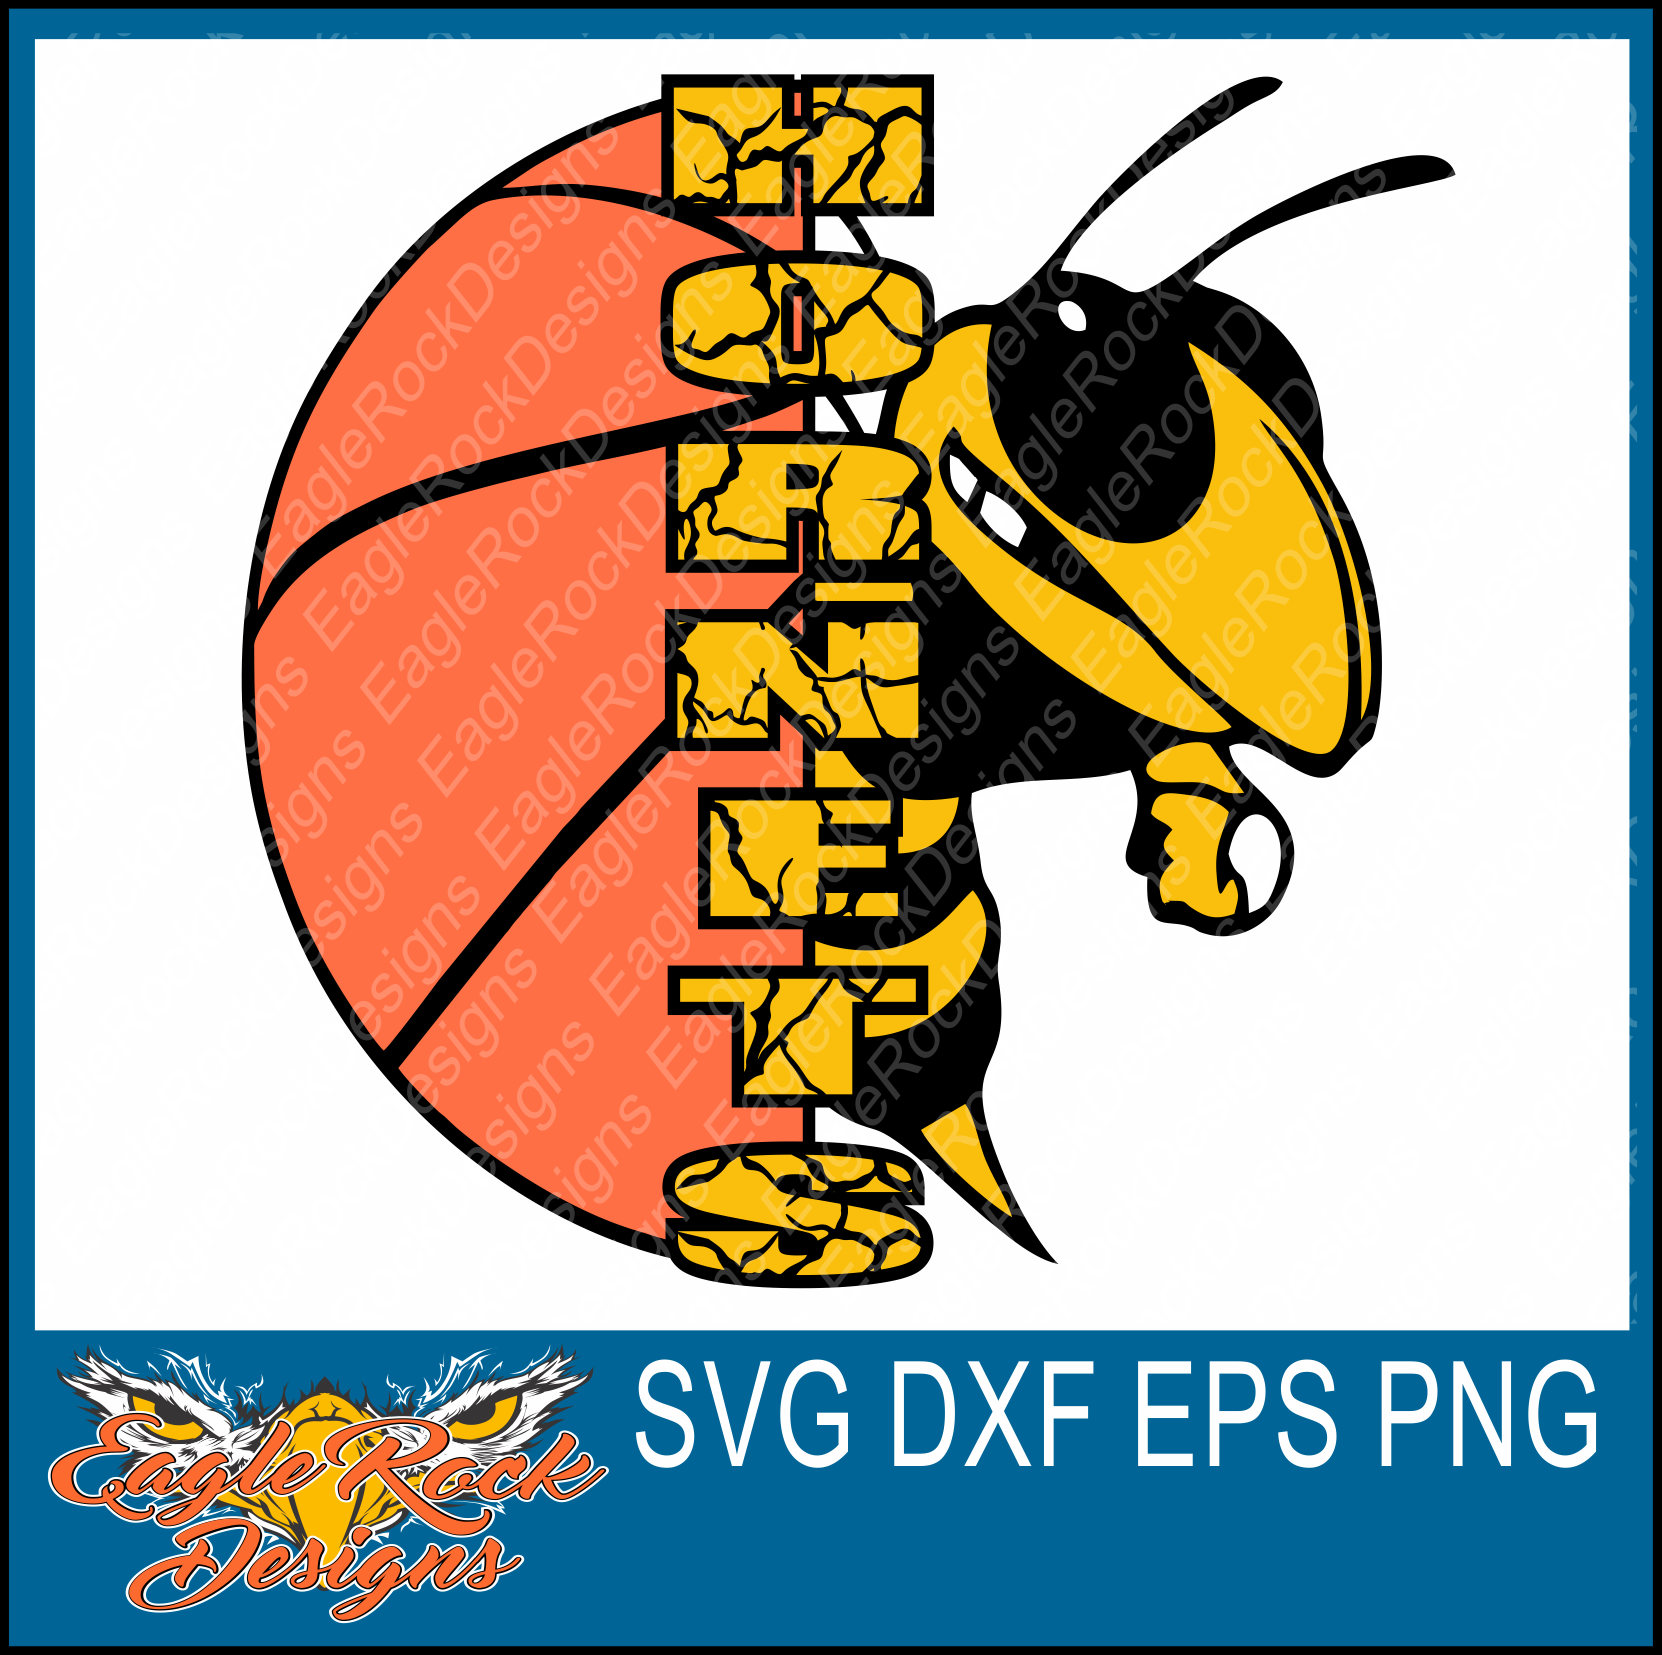 Hornets Basketball SVG DXF EPS Png Cut File Hornets